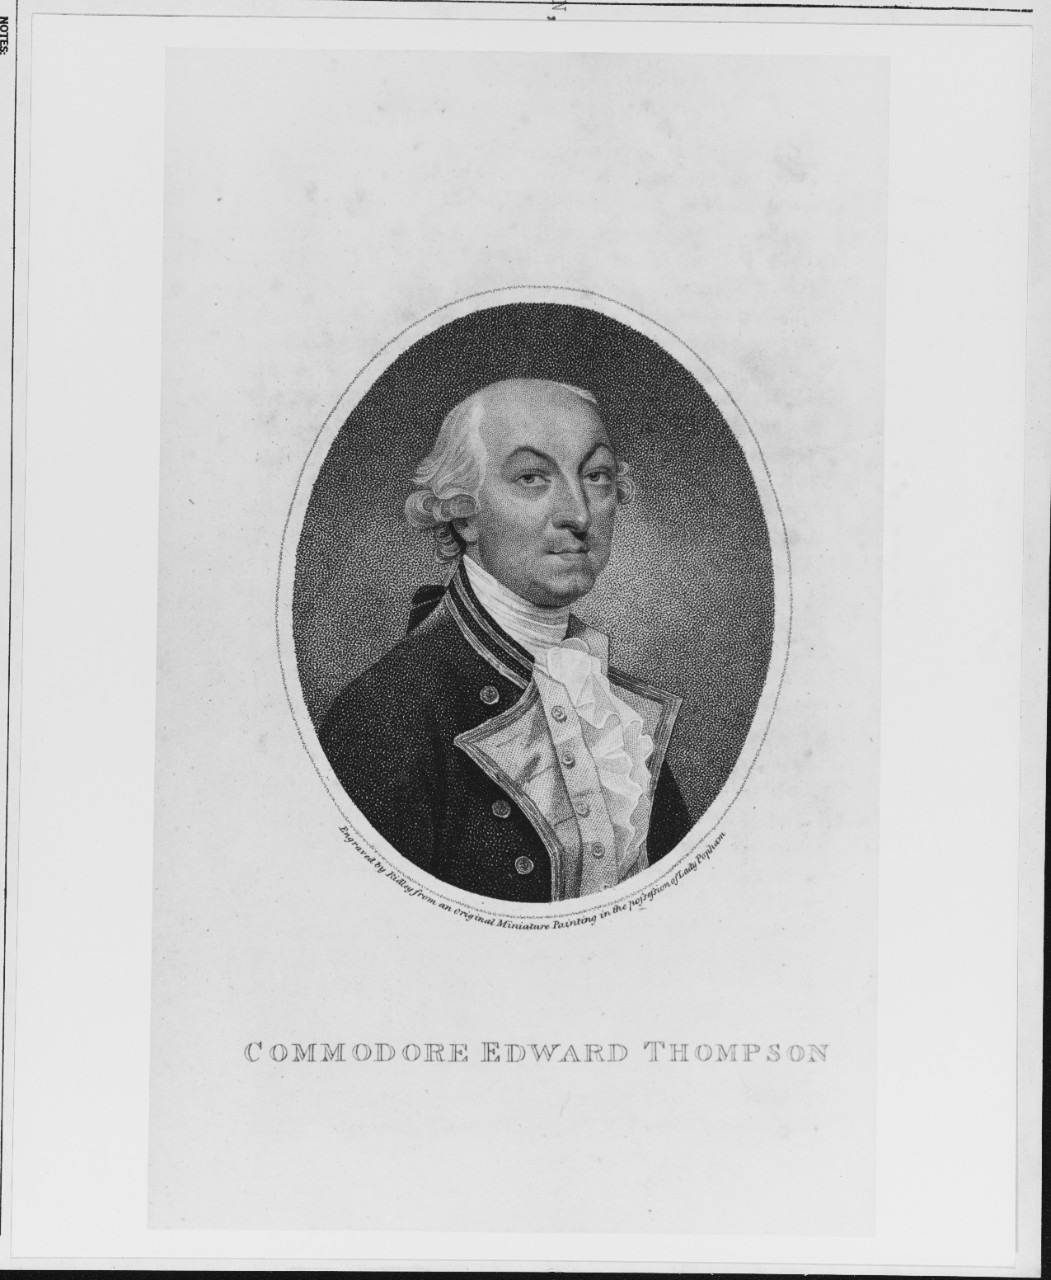 Edward Thompson (1738?-1786), Captain, Royal Navy